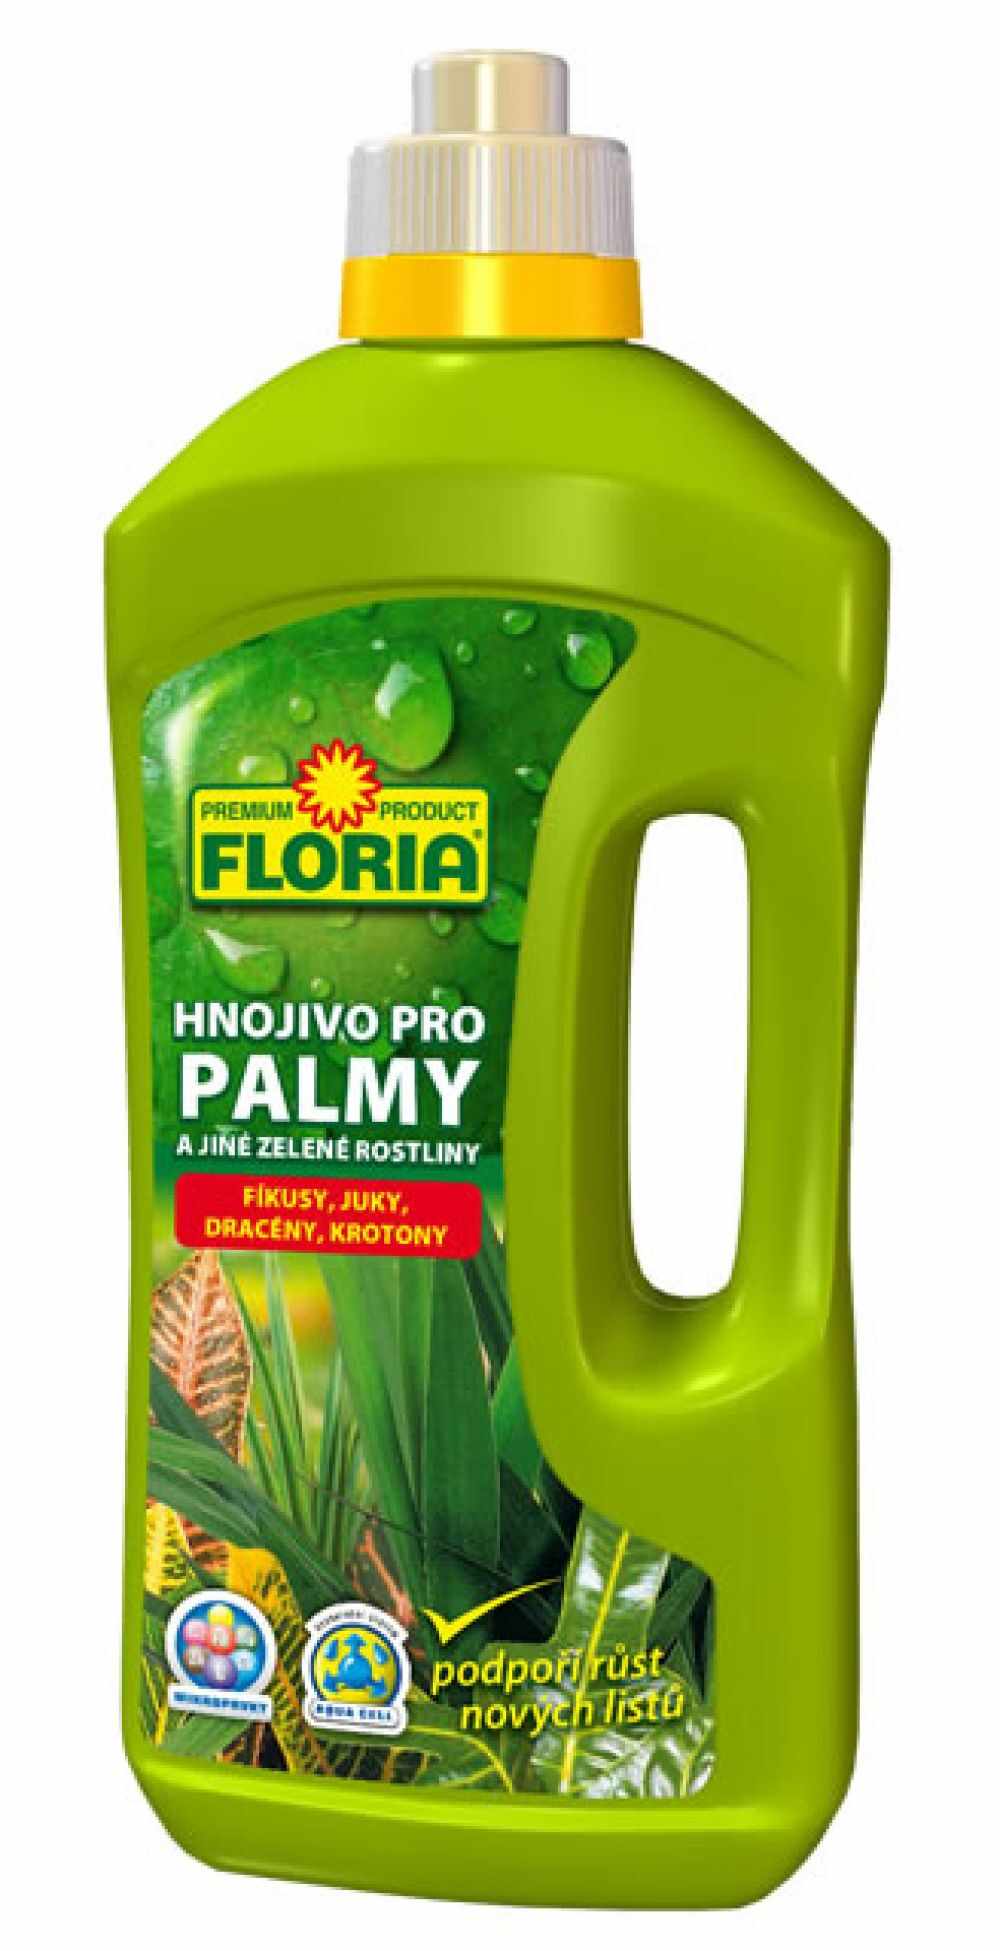 Ingrasamant lichid pentru palmieri si plante verzi FLORIA 1 l